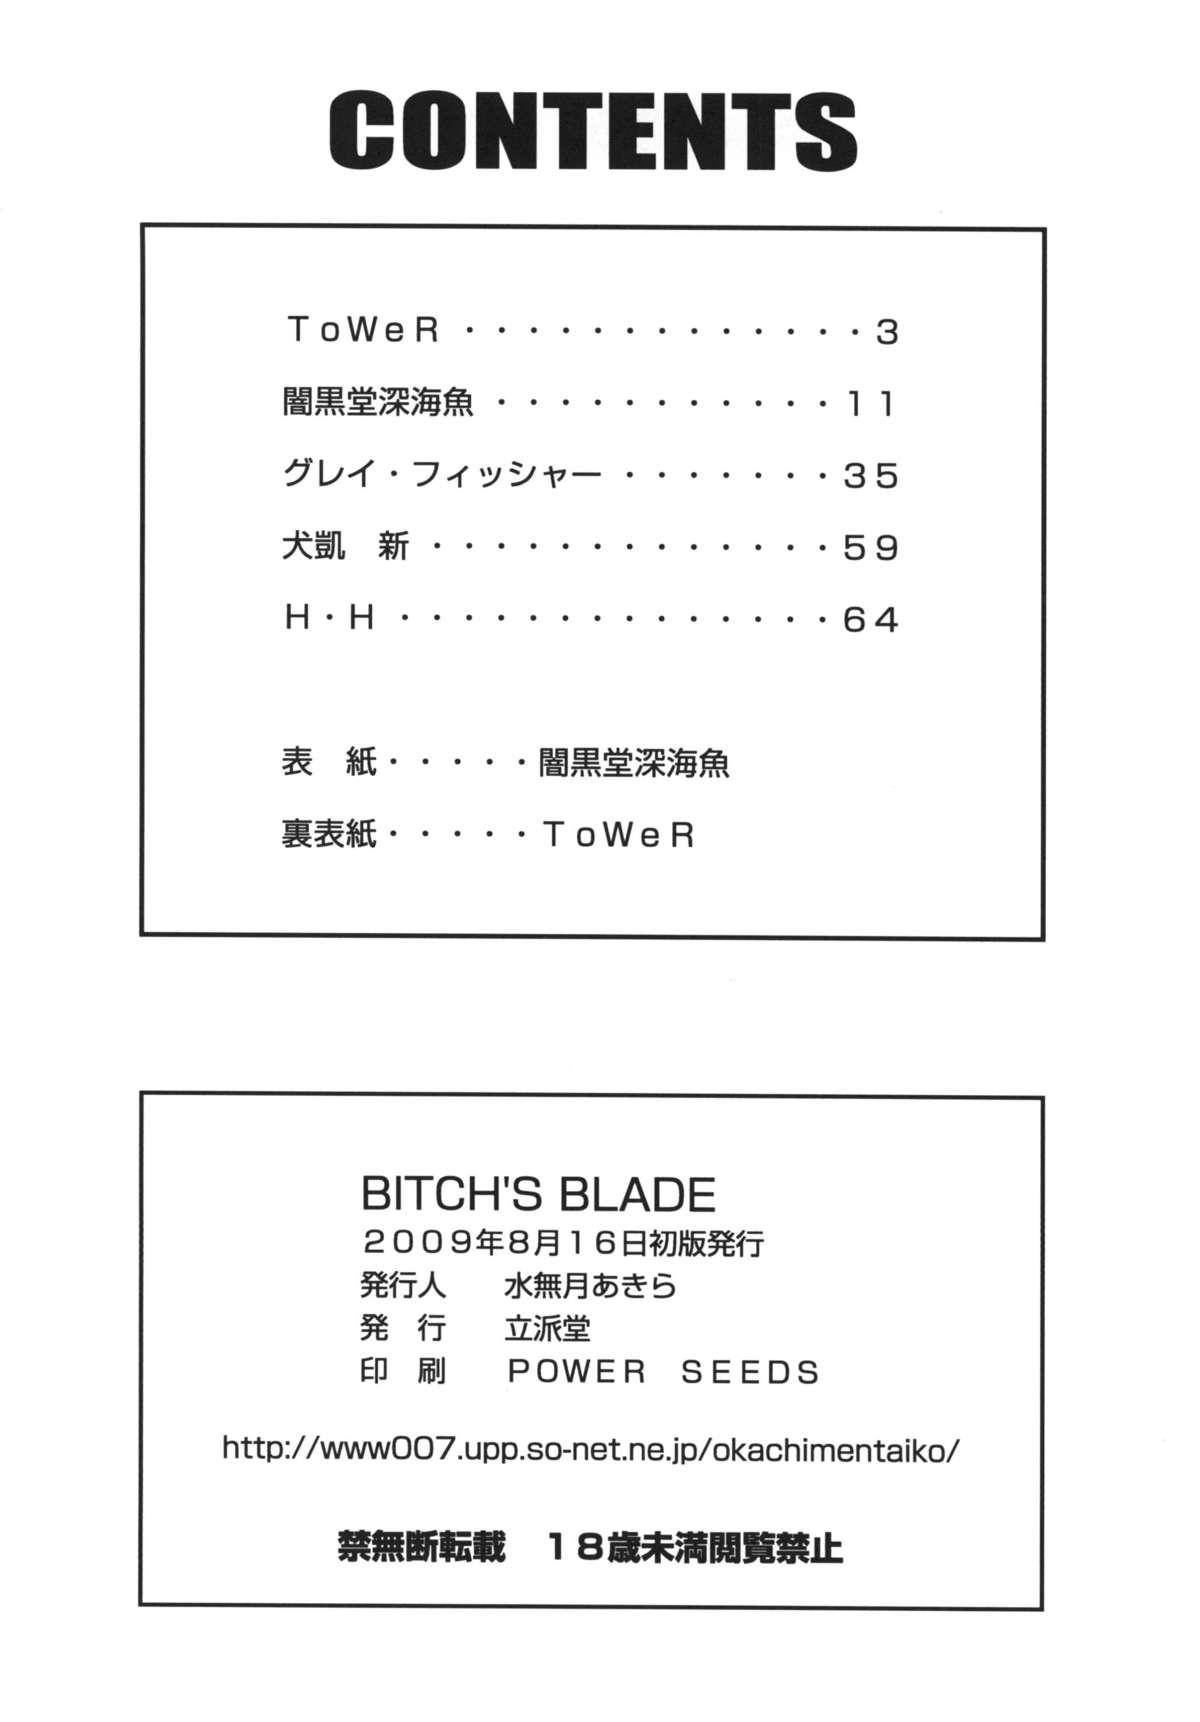 BITCH'S BLADE 65